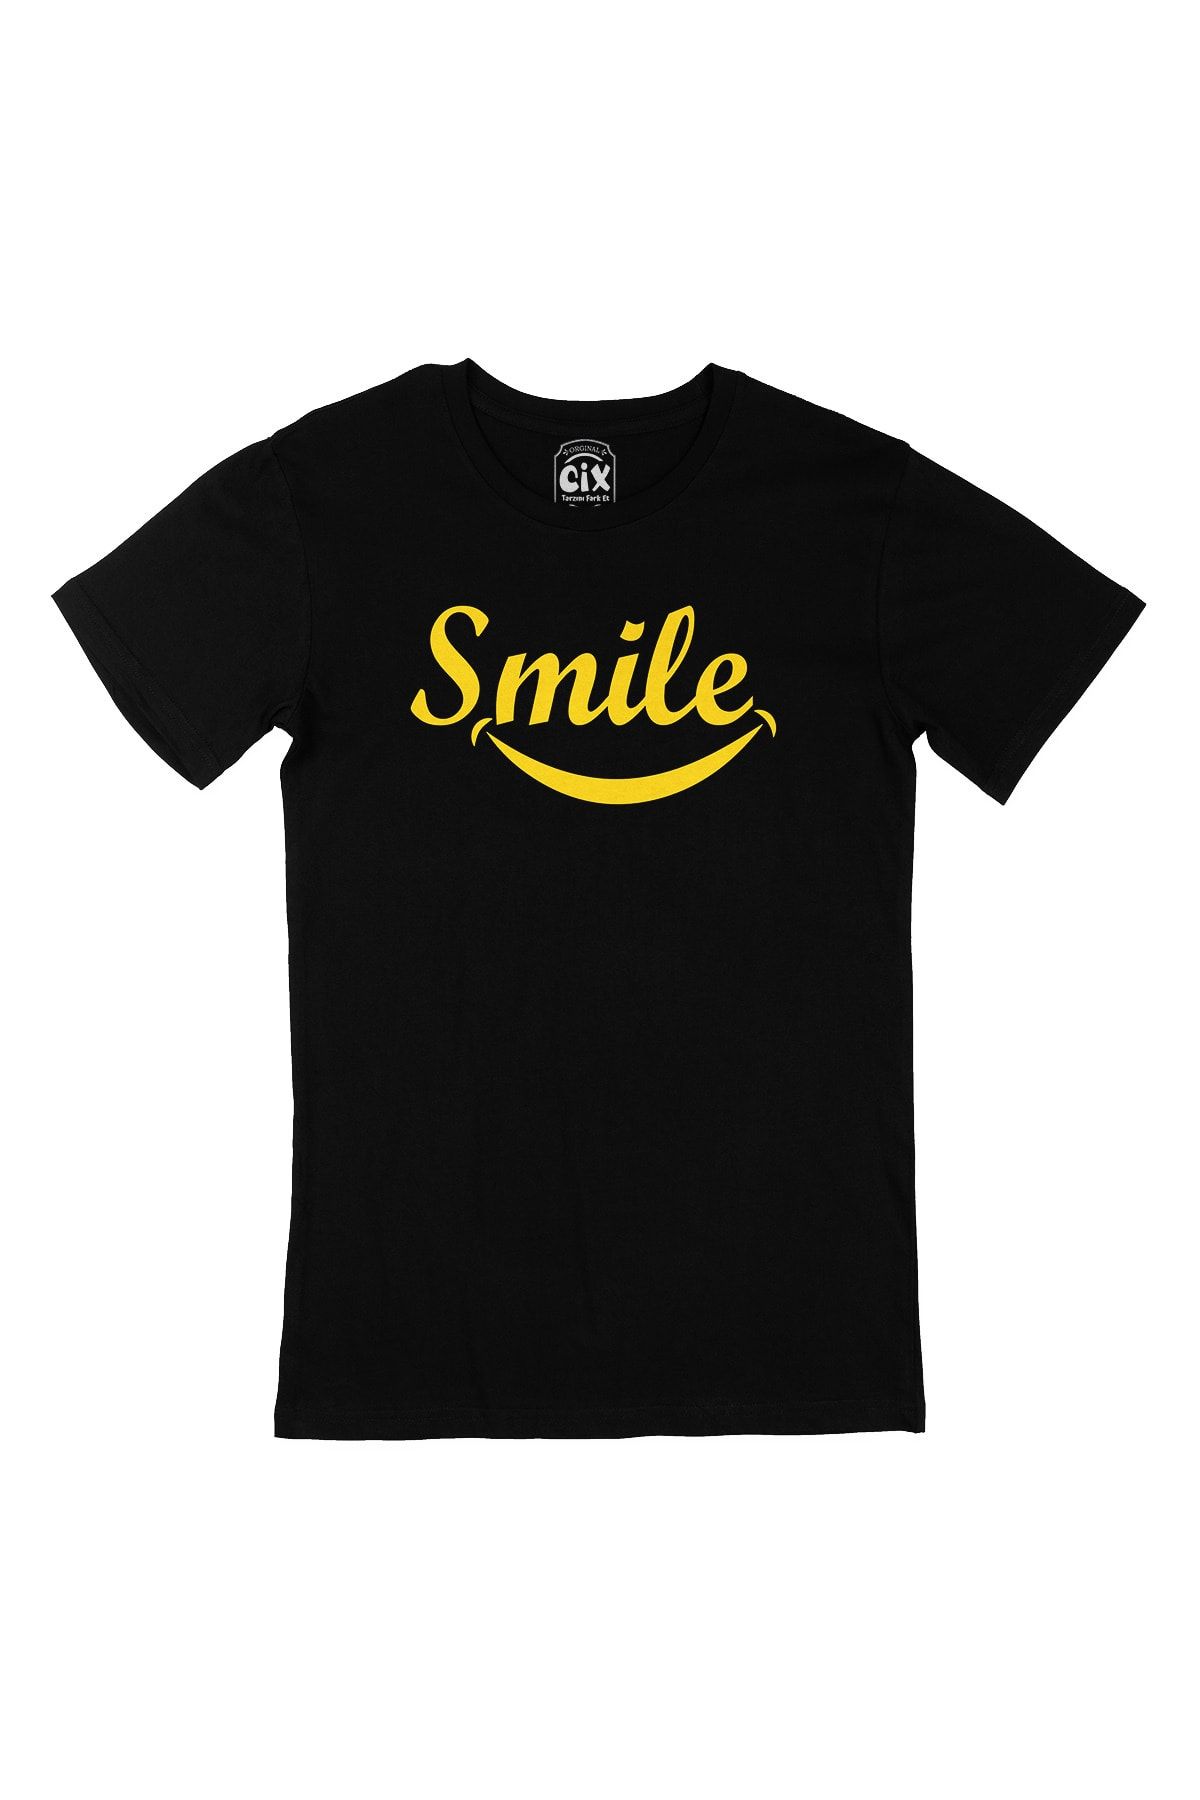 Cix Smile Gülümse Siyah Tişört